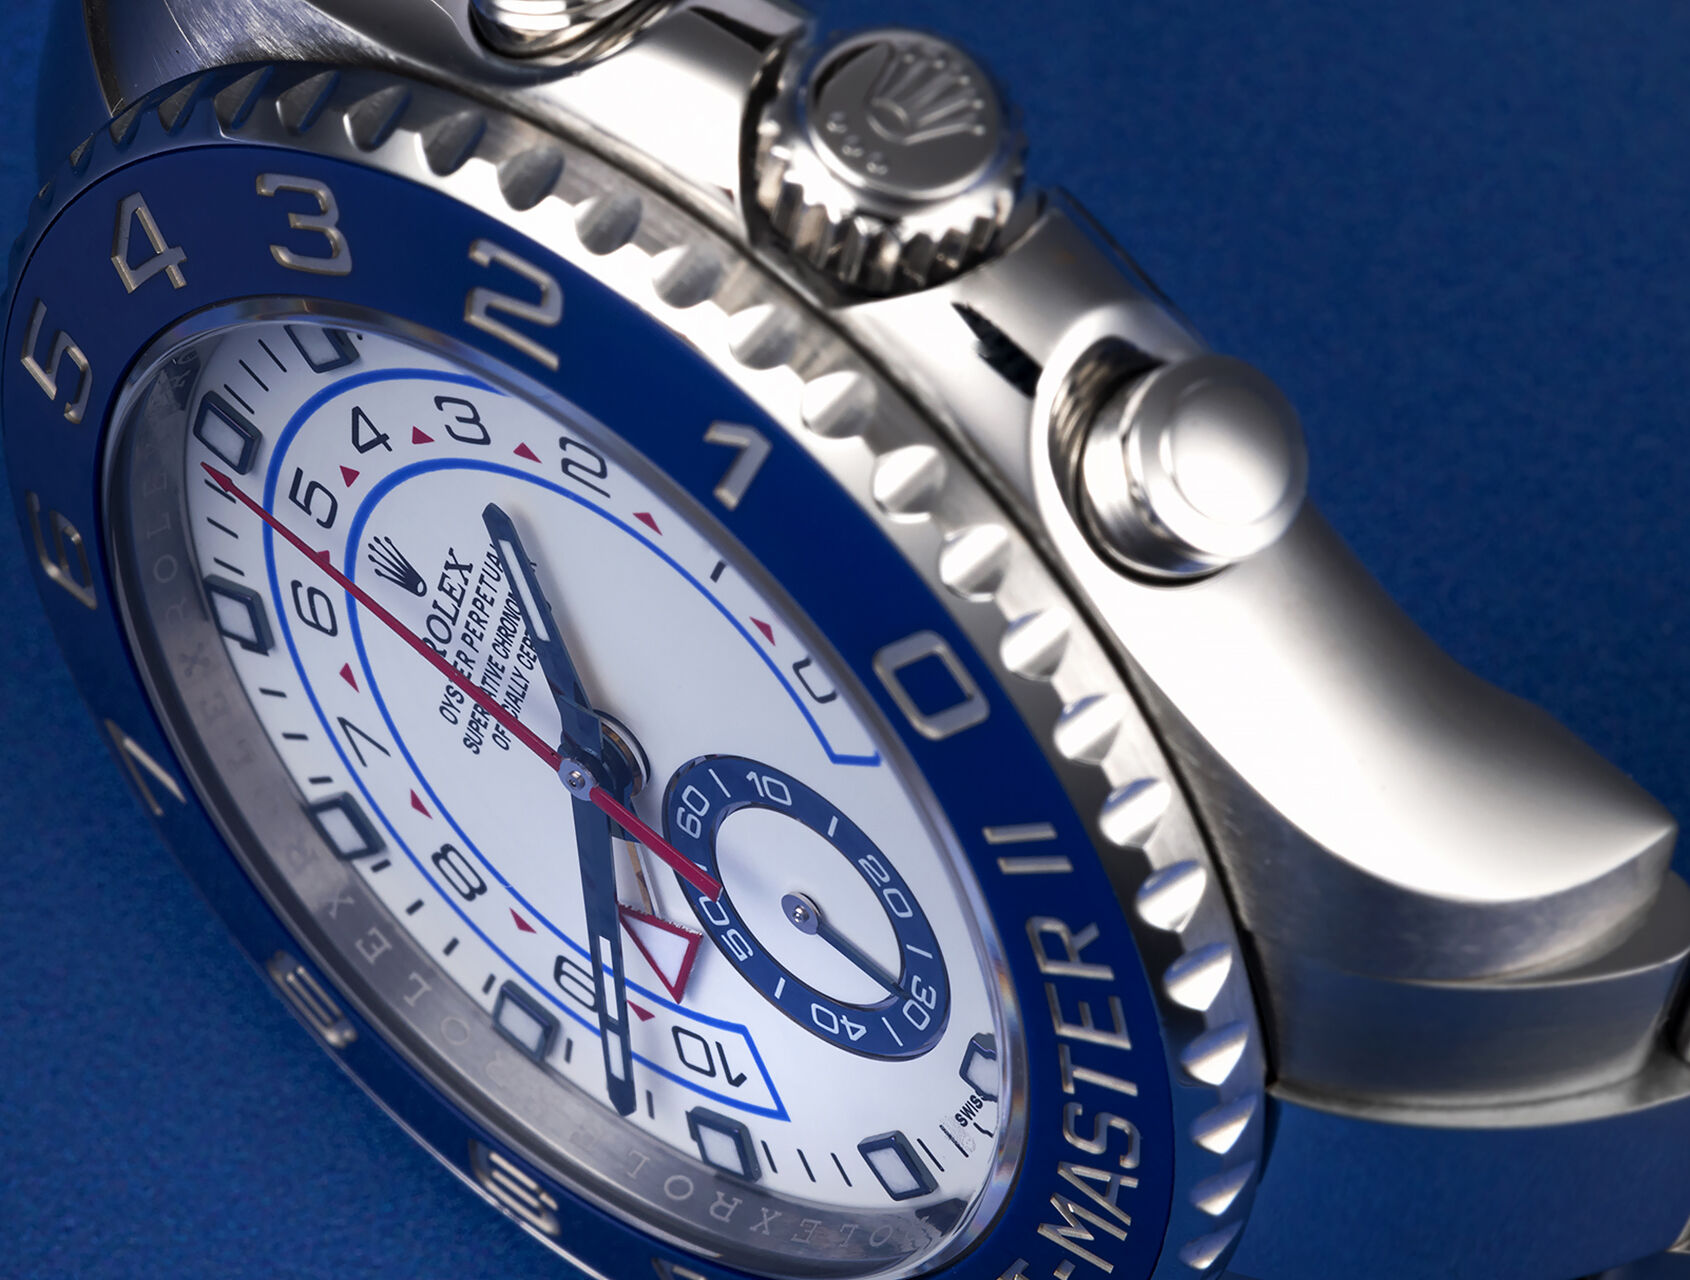 ref 116680 | 116680 - Regatta Chronograph  | Rolex Yacht-Master II